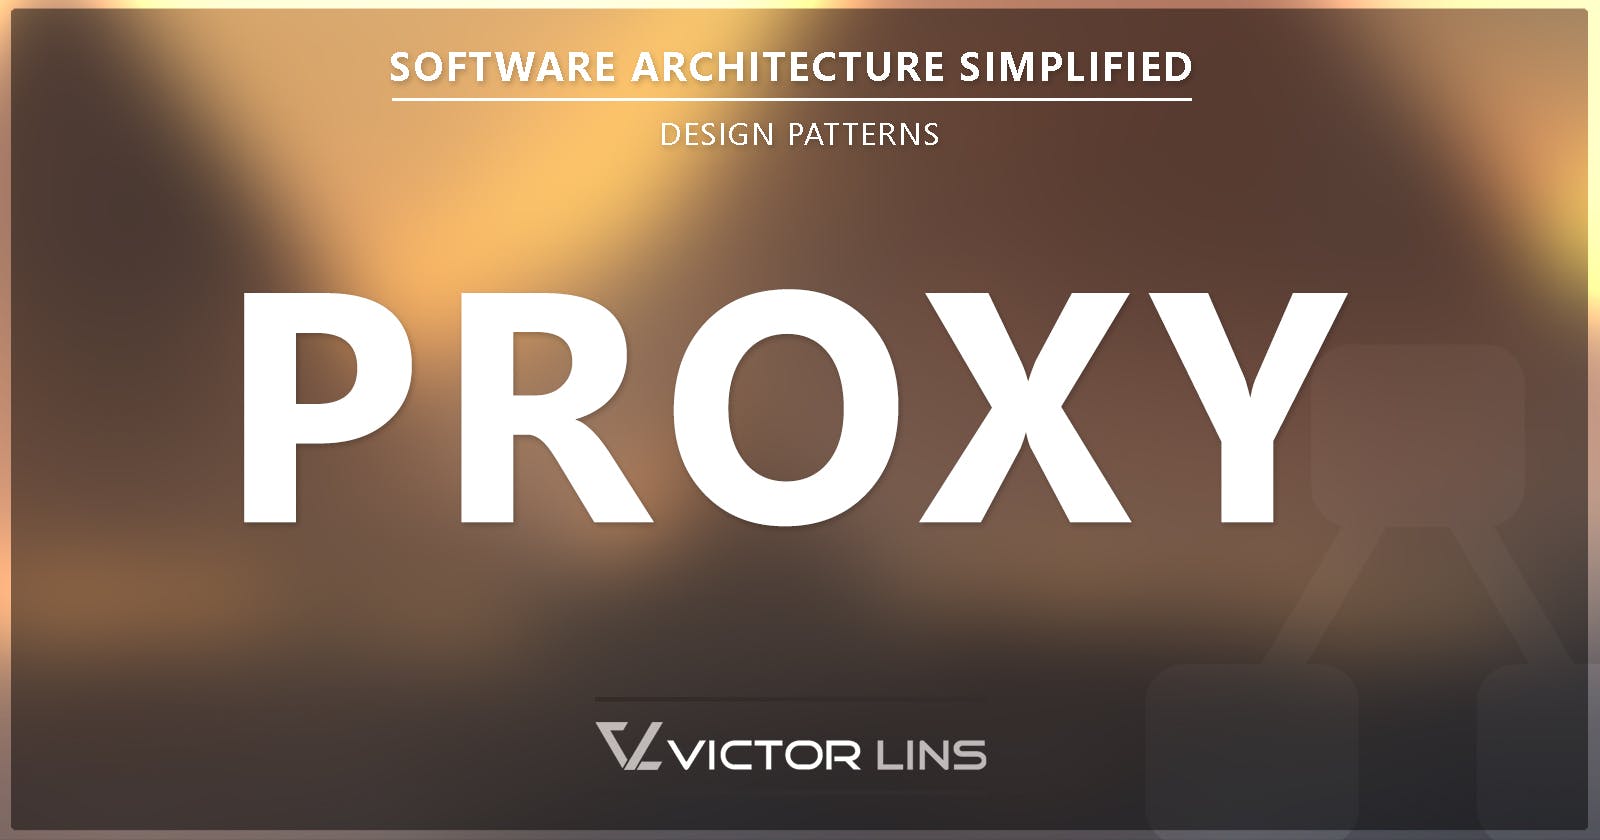 Proxy - Design Pattern